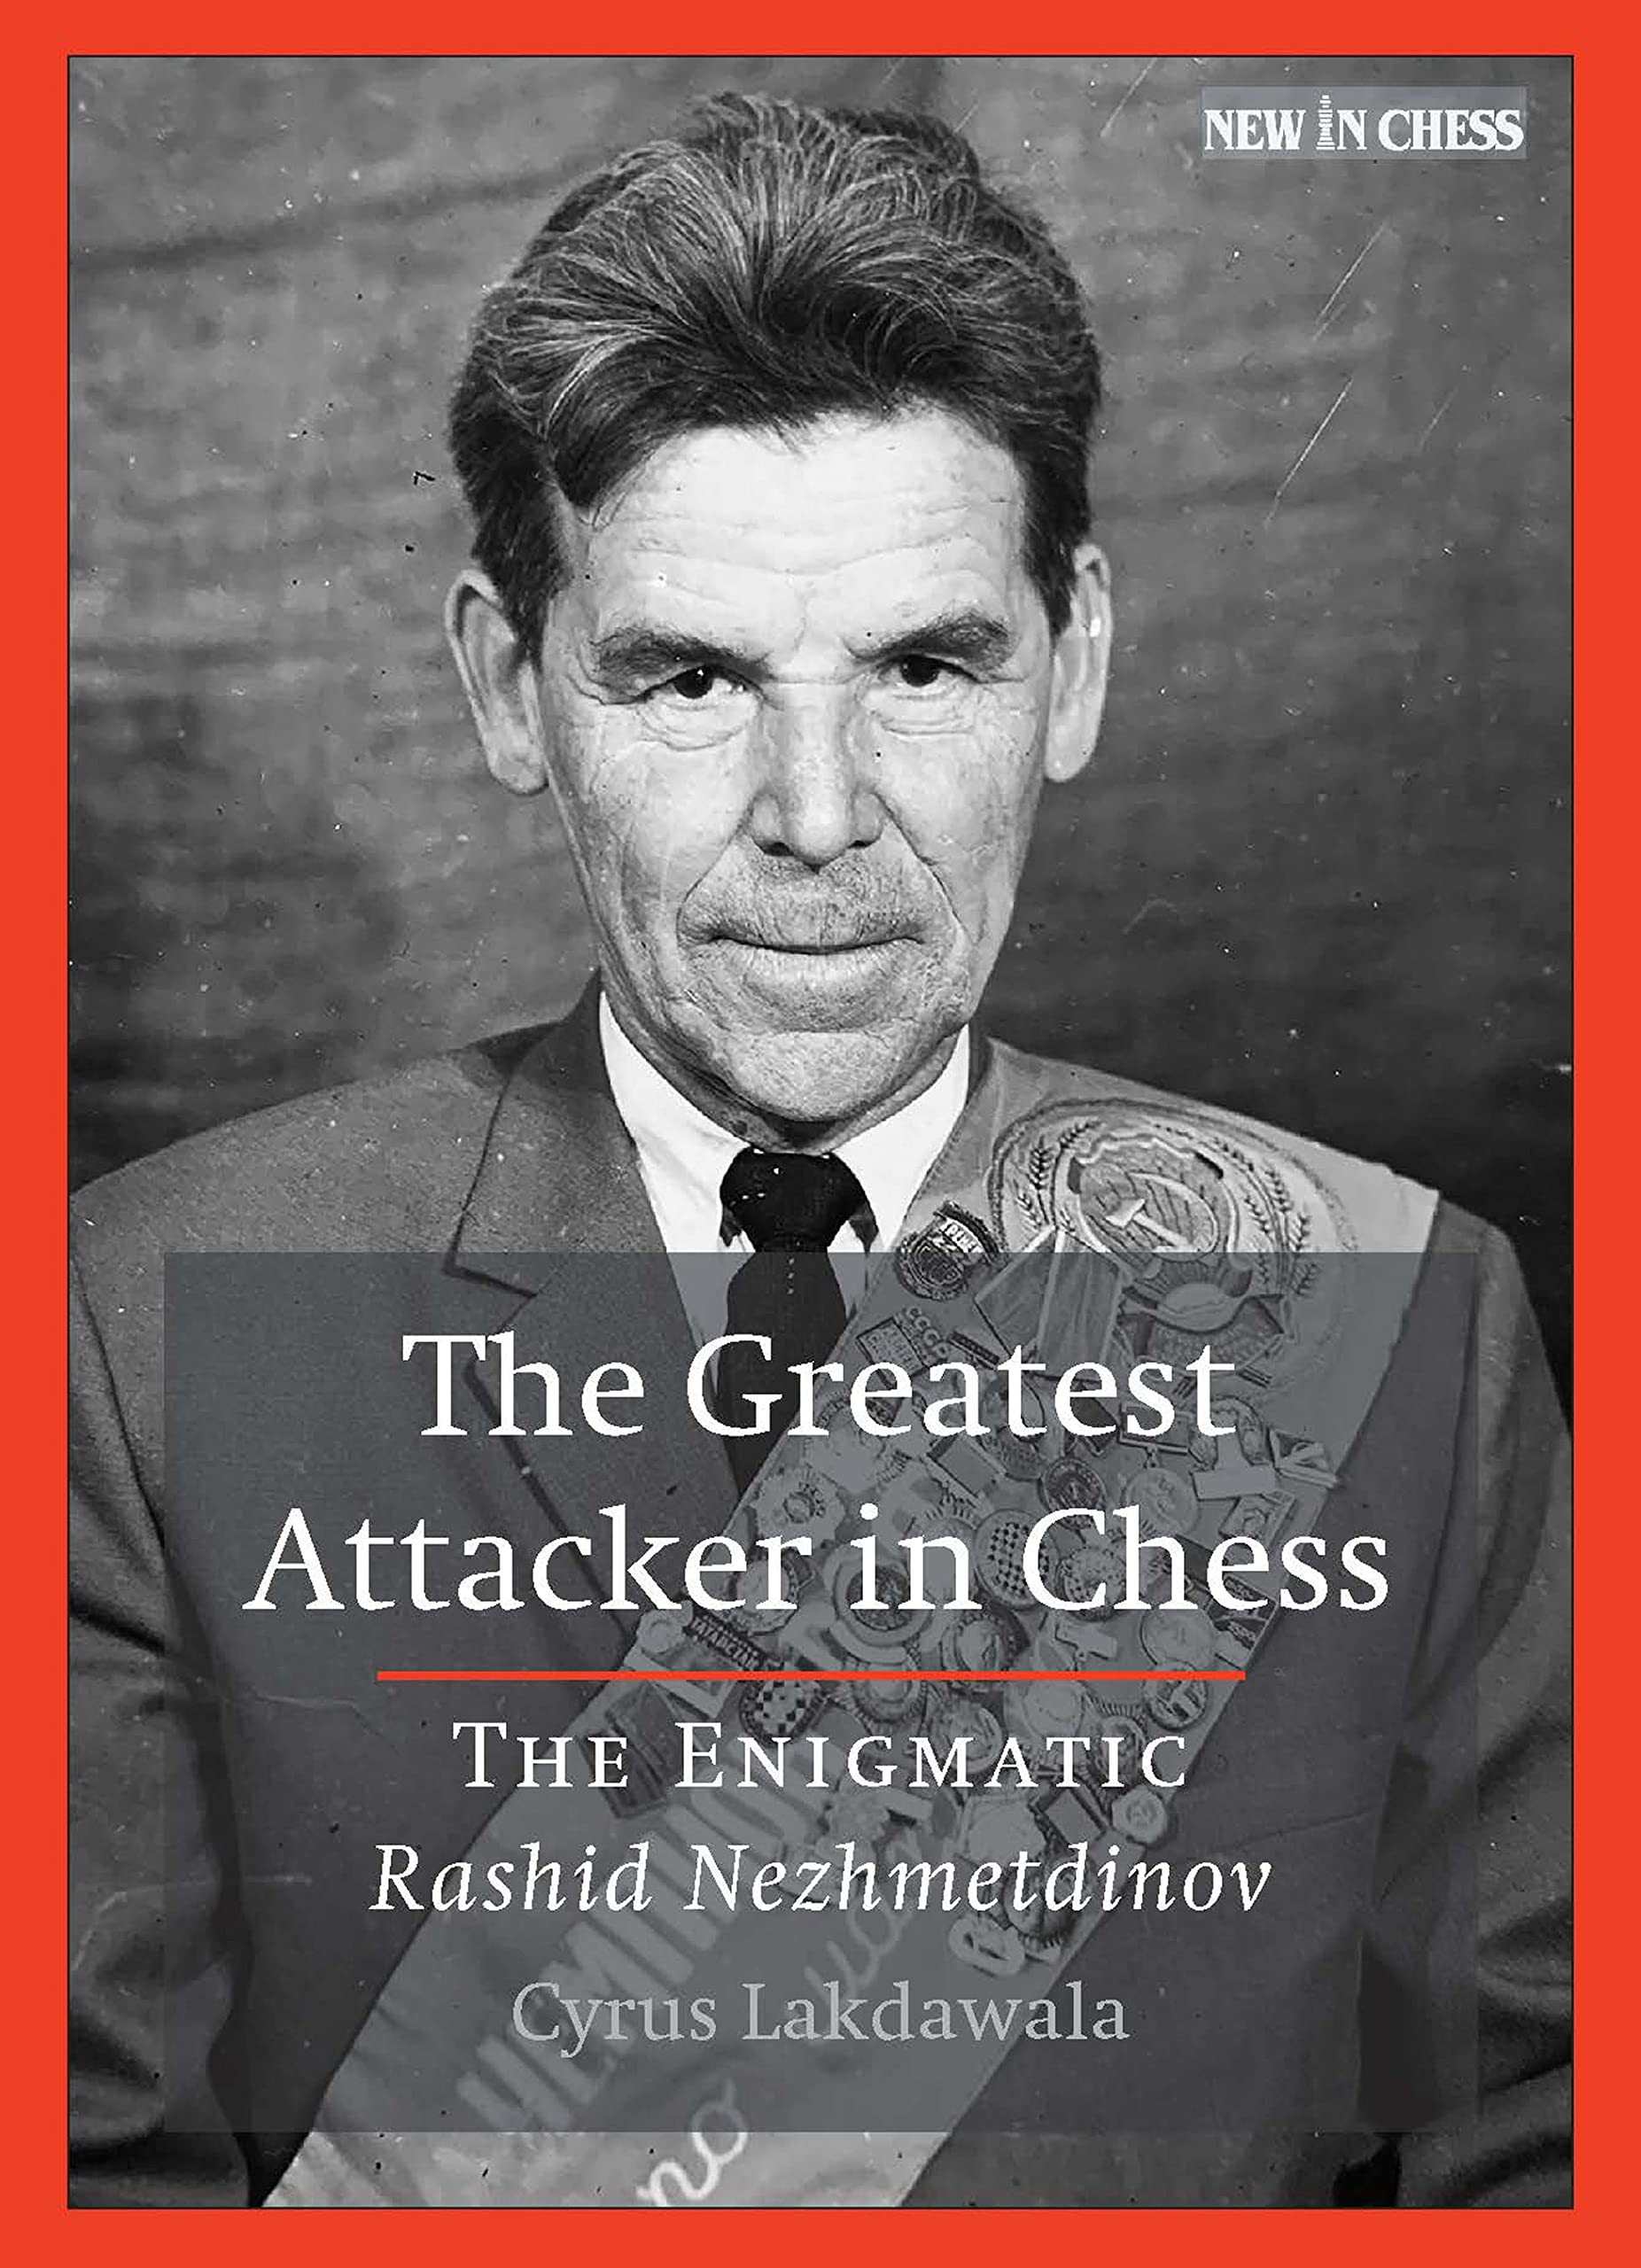 The Greatest Attacker in Chess: The Enigmatic Rashid Nezhmetdinov, Cyrus Lakdawala, New in Chess, ISBN-13 ‏ : ‎ 978-9071689000